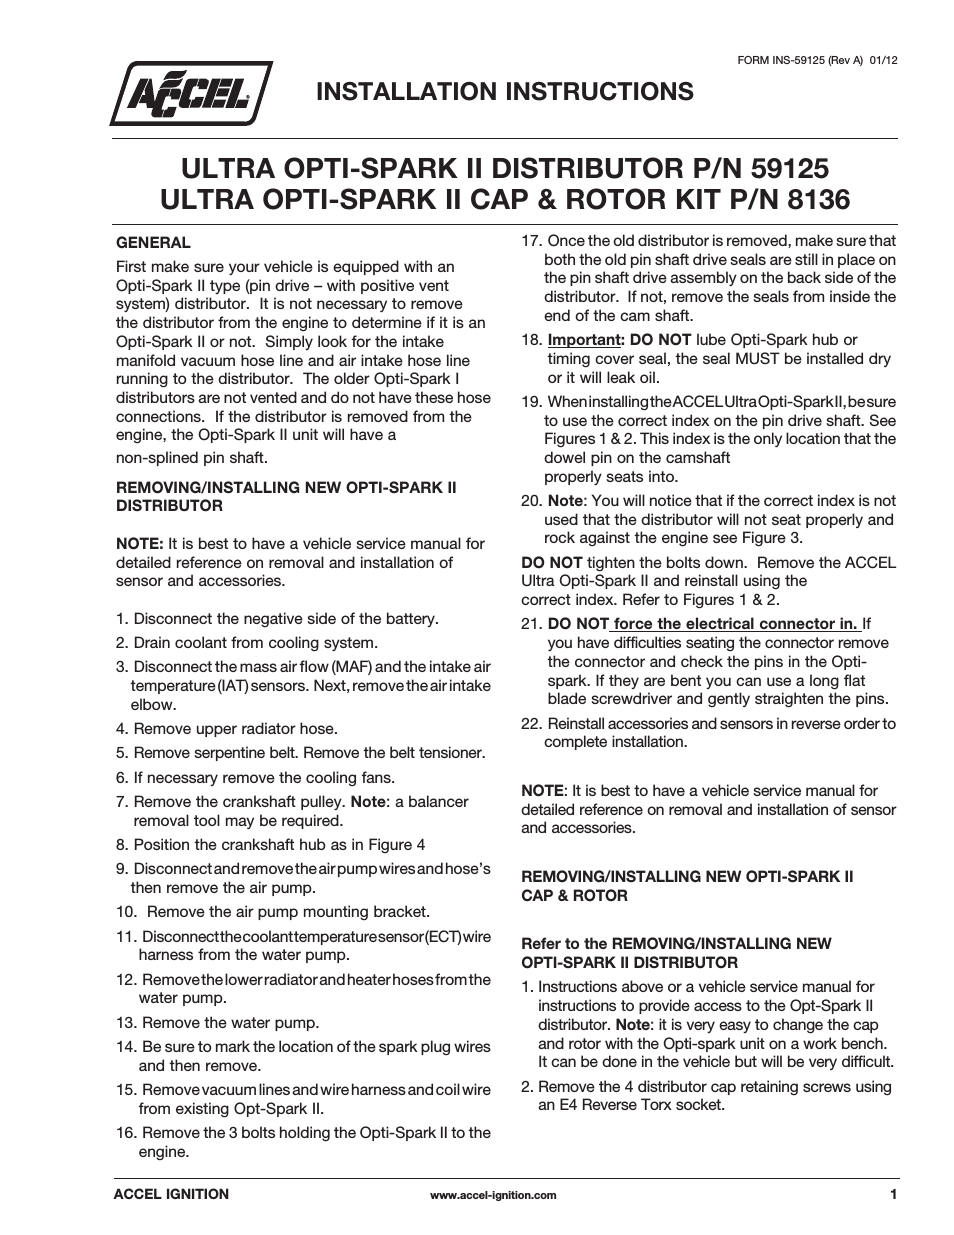 ACCEL ULTRA OPTI-SPARK II CAP & ROTOR KIT 8136